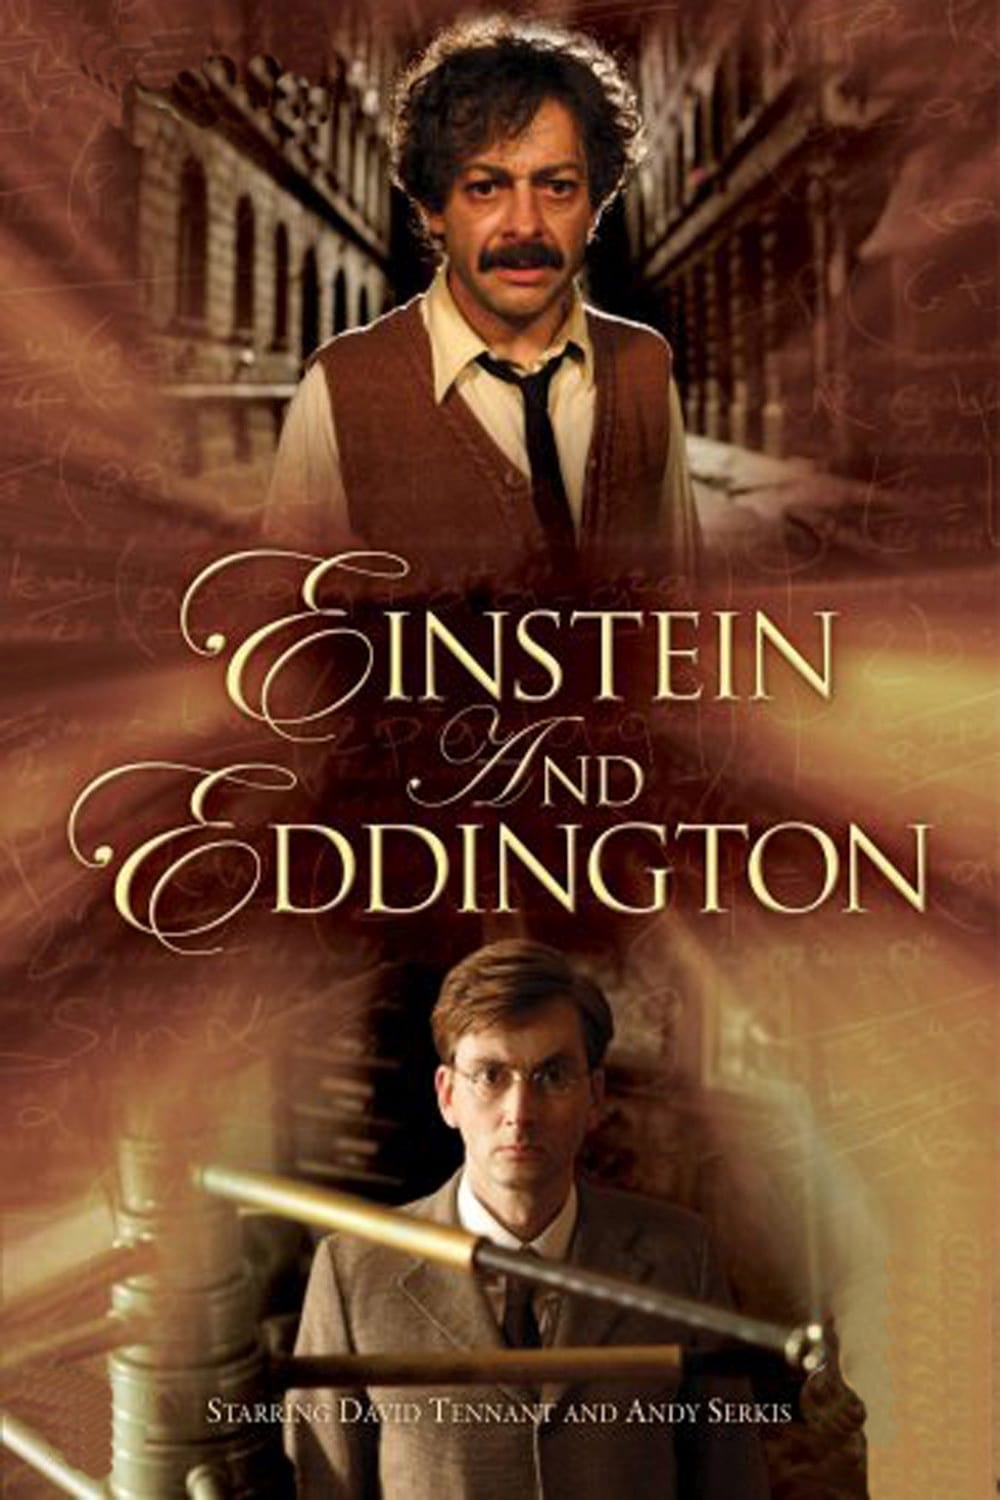 Einştein ve Eddington